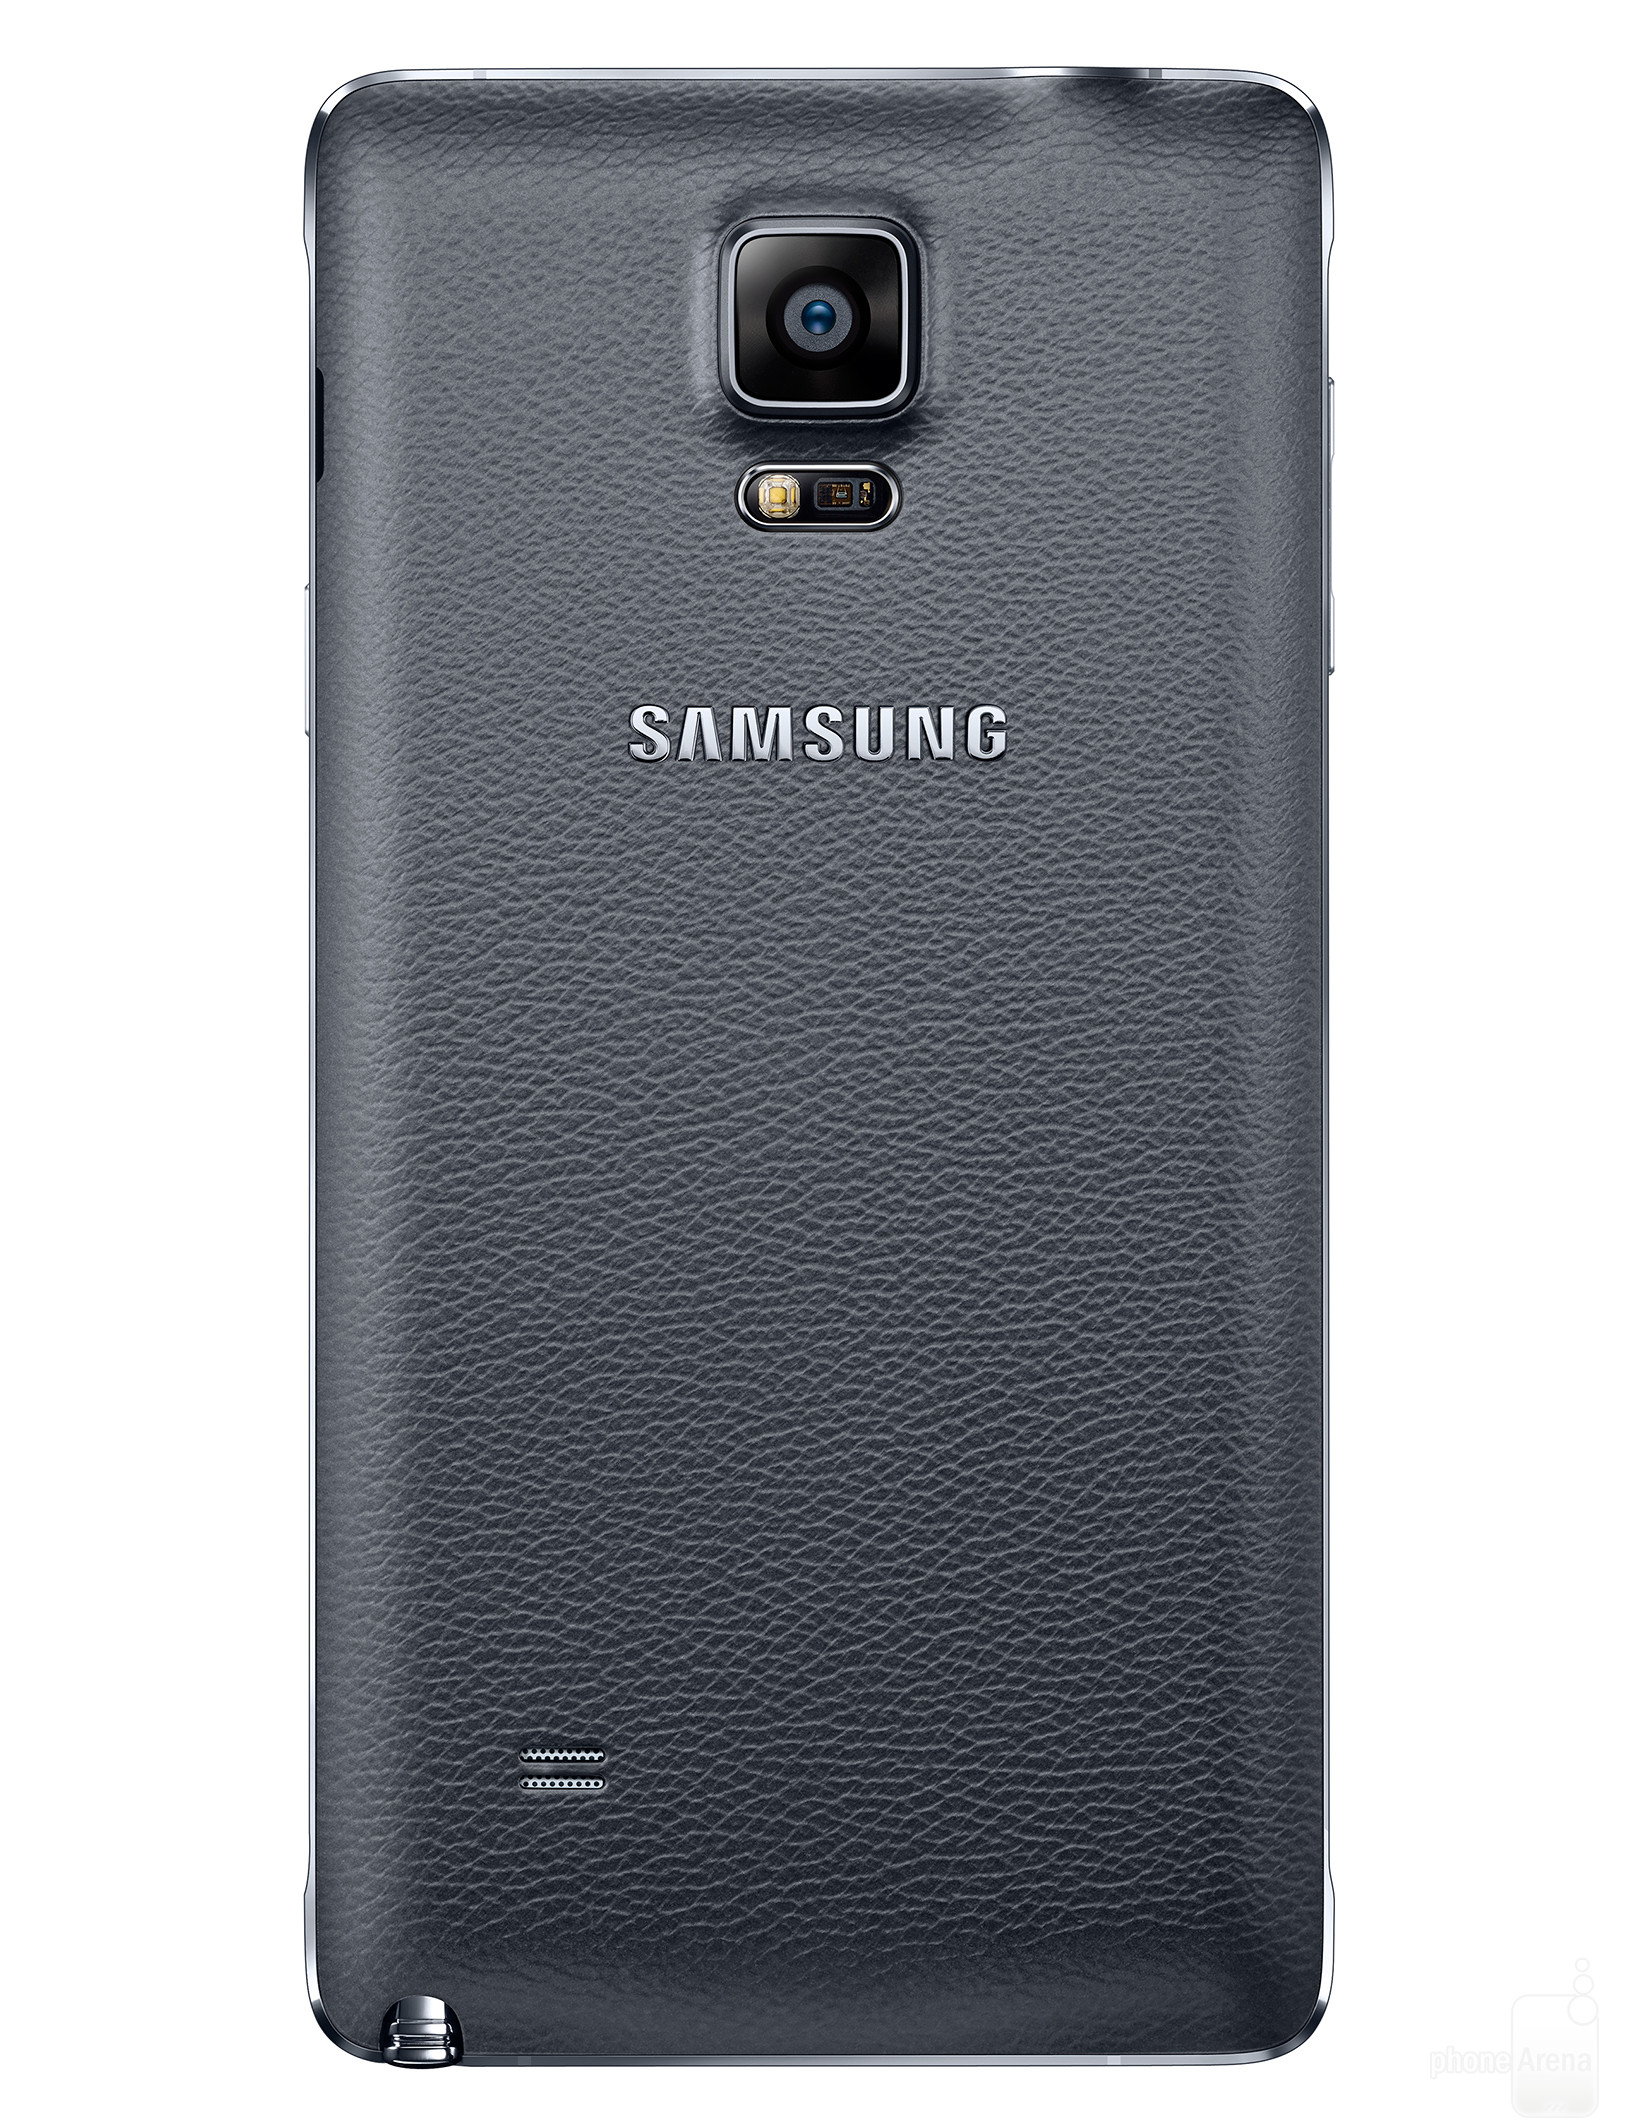 Samsung-Galaxy-Note-4 (6)